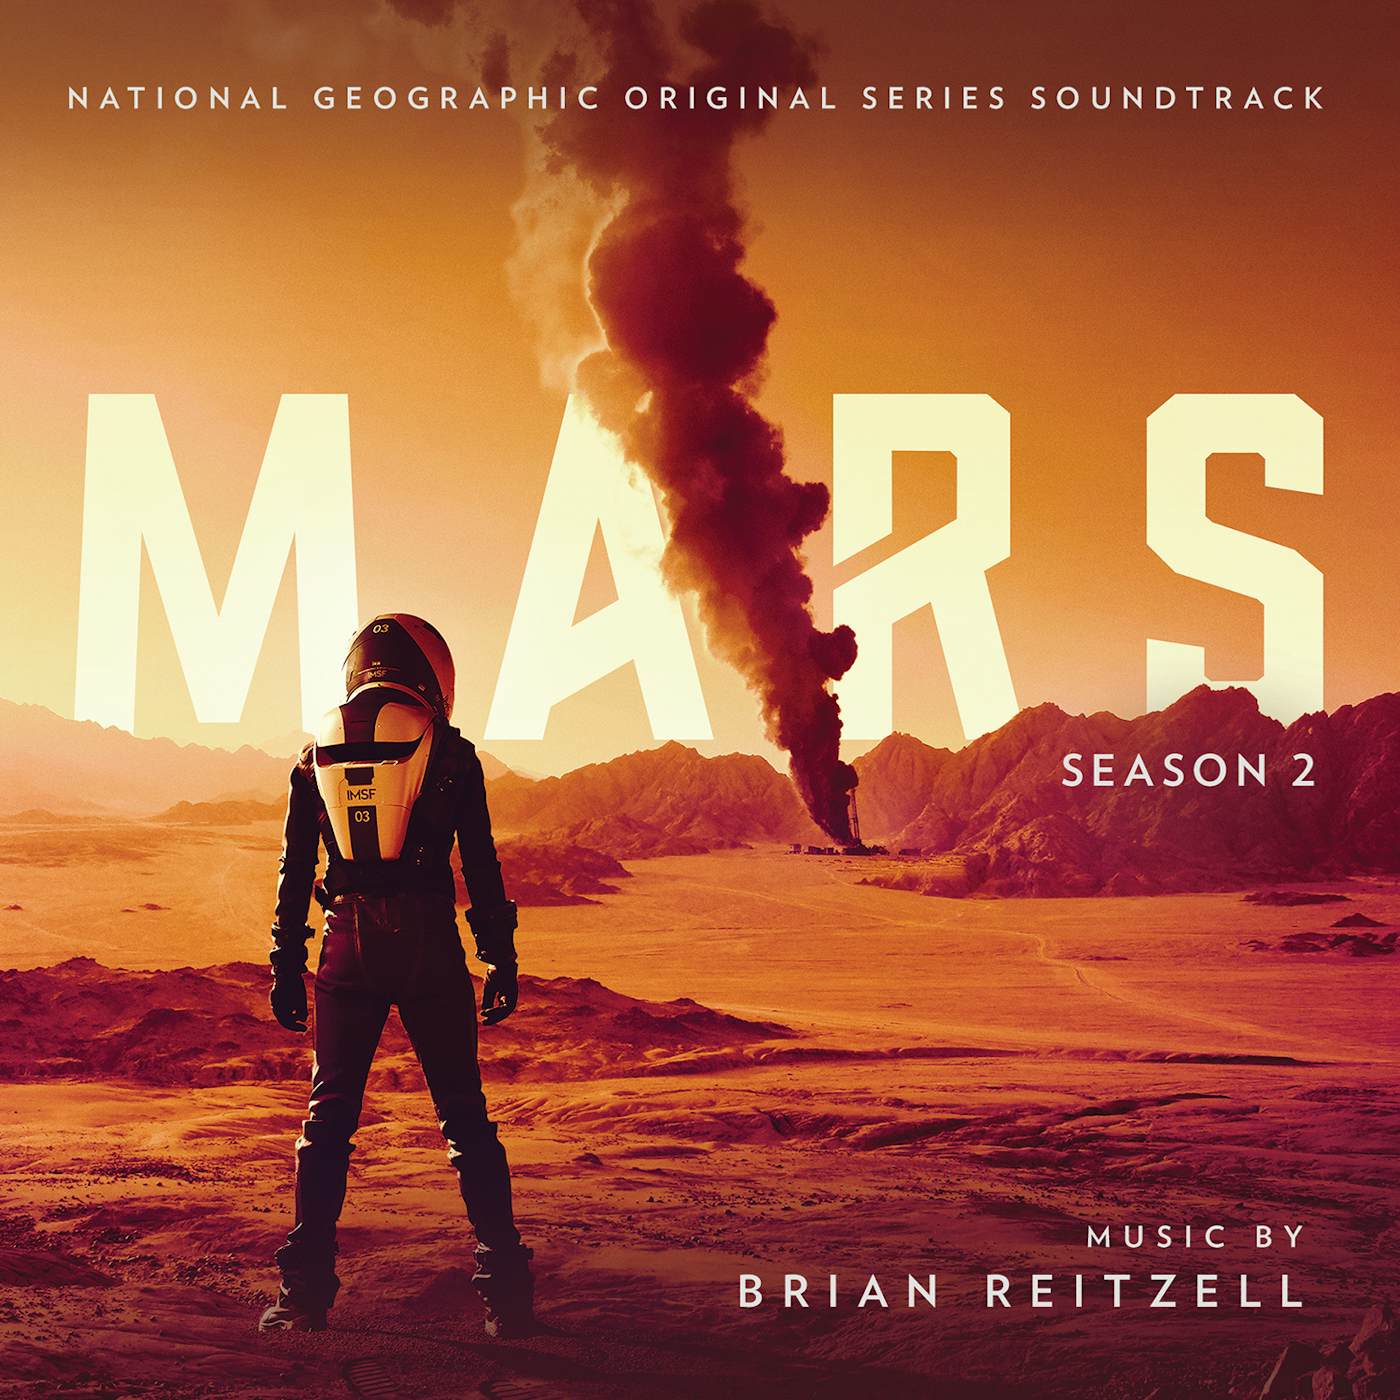 Brian Reitzell MARS SEASON 2 - Original Soundtrack CD